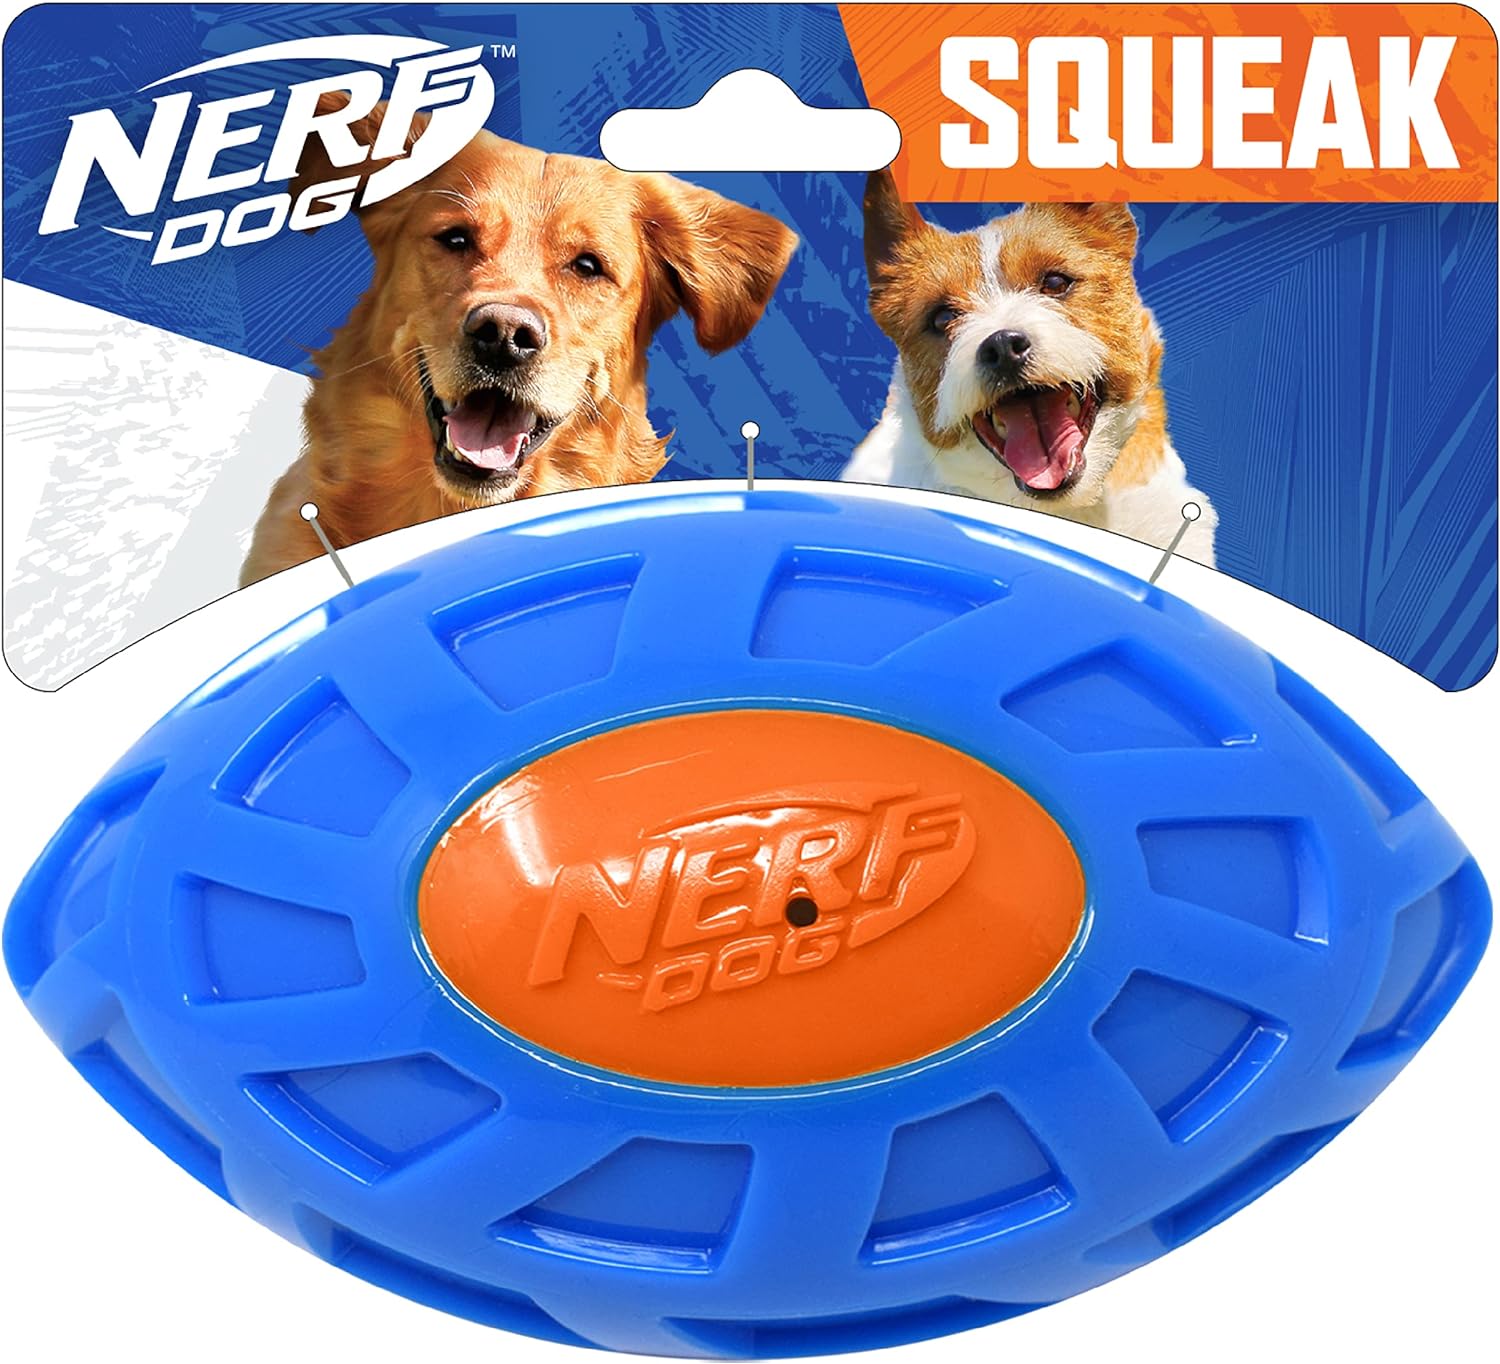 Nerf Dog 6in TPR EXO Squeak Football - Blue/Orange